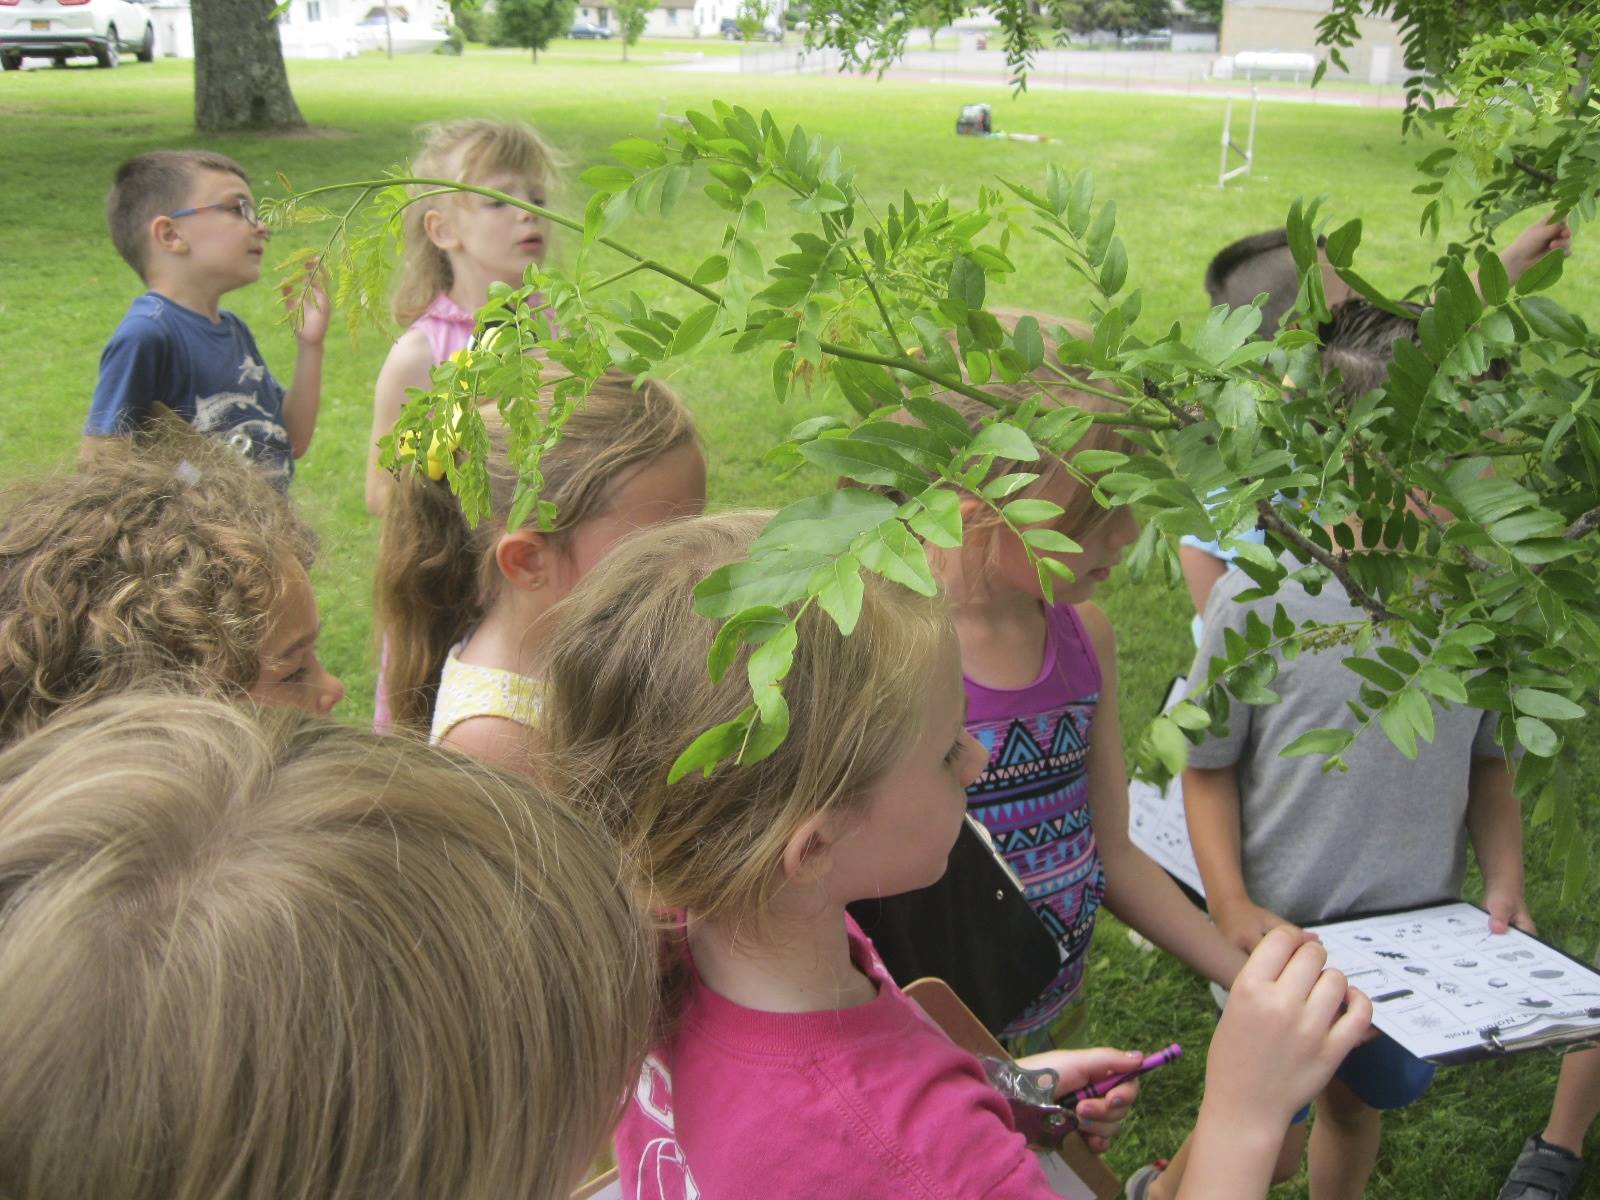 Students on a nature walk explore plants